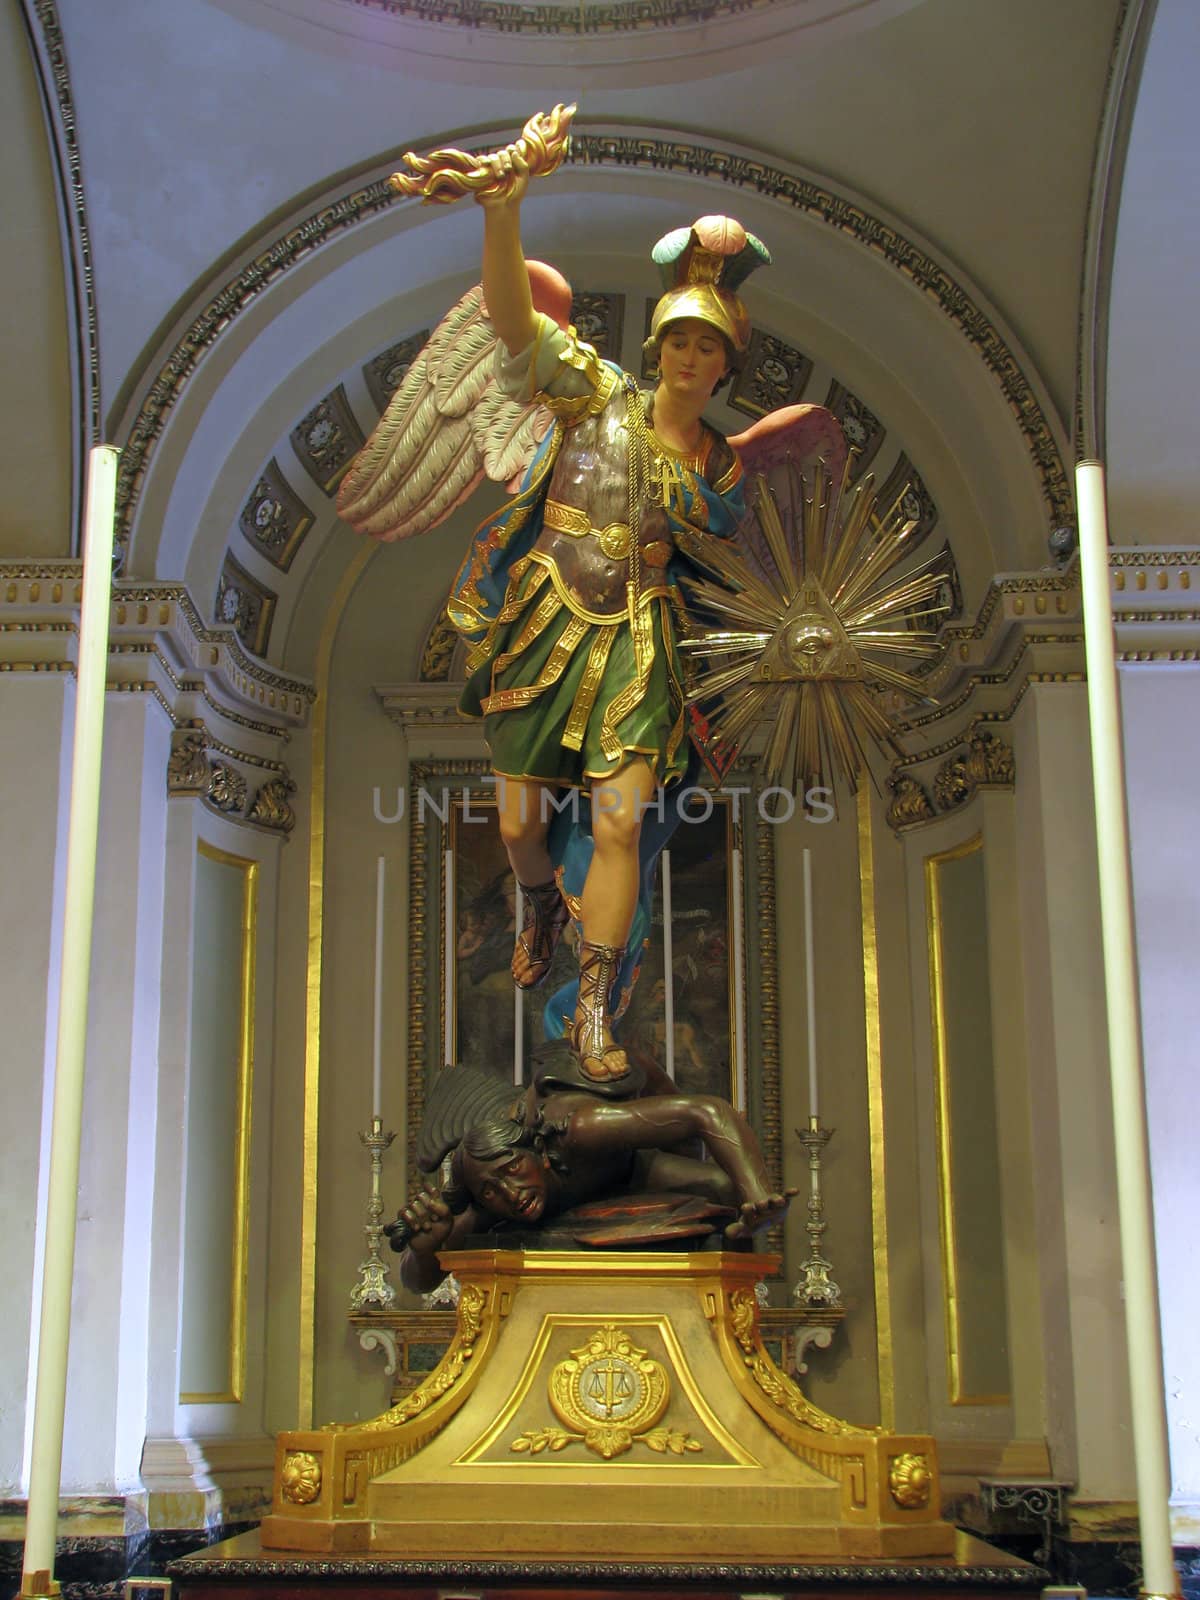 The statue of Saint Michael The Archangel in Cospicua, Malta.